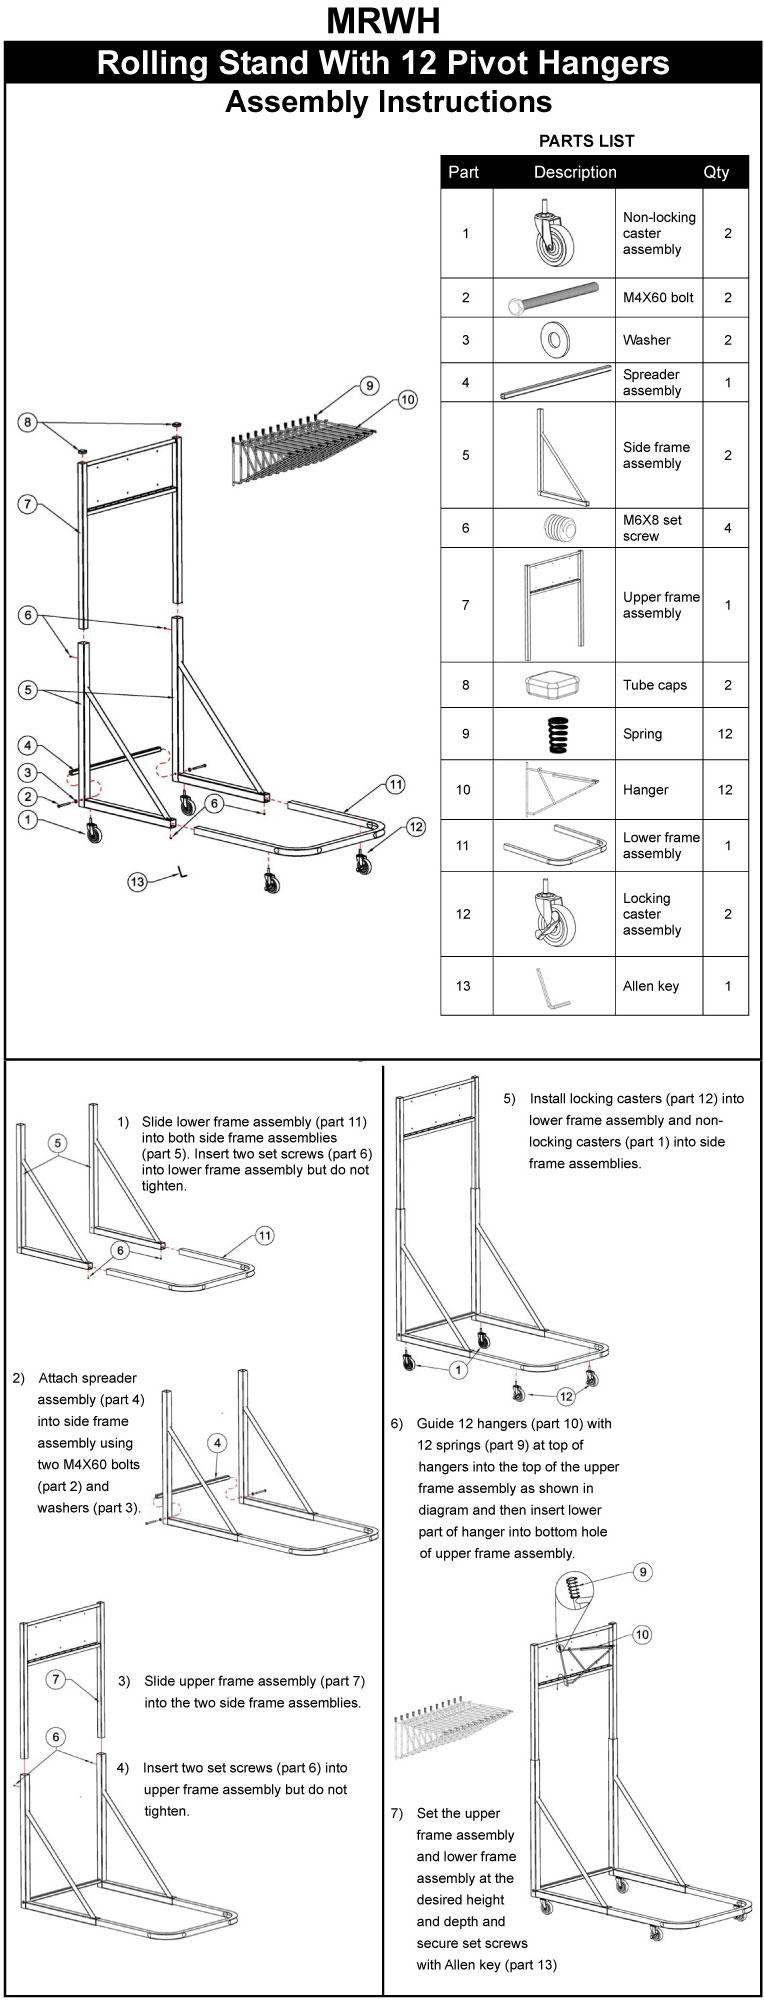 stuffing box assembly drawing pdf download